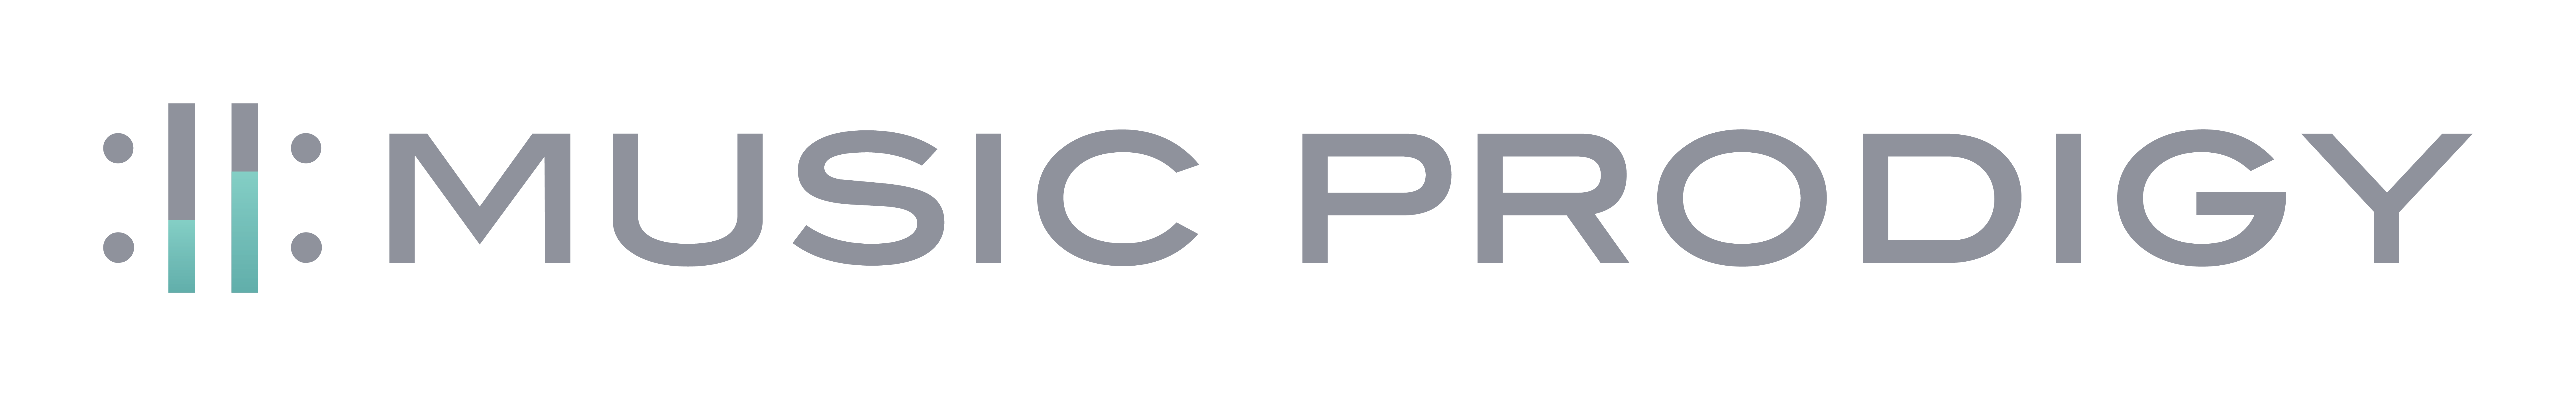 Music Prodigy Logo